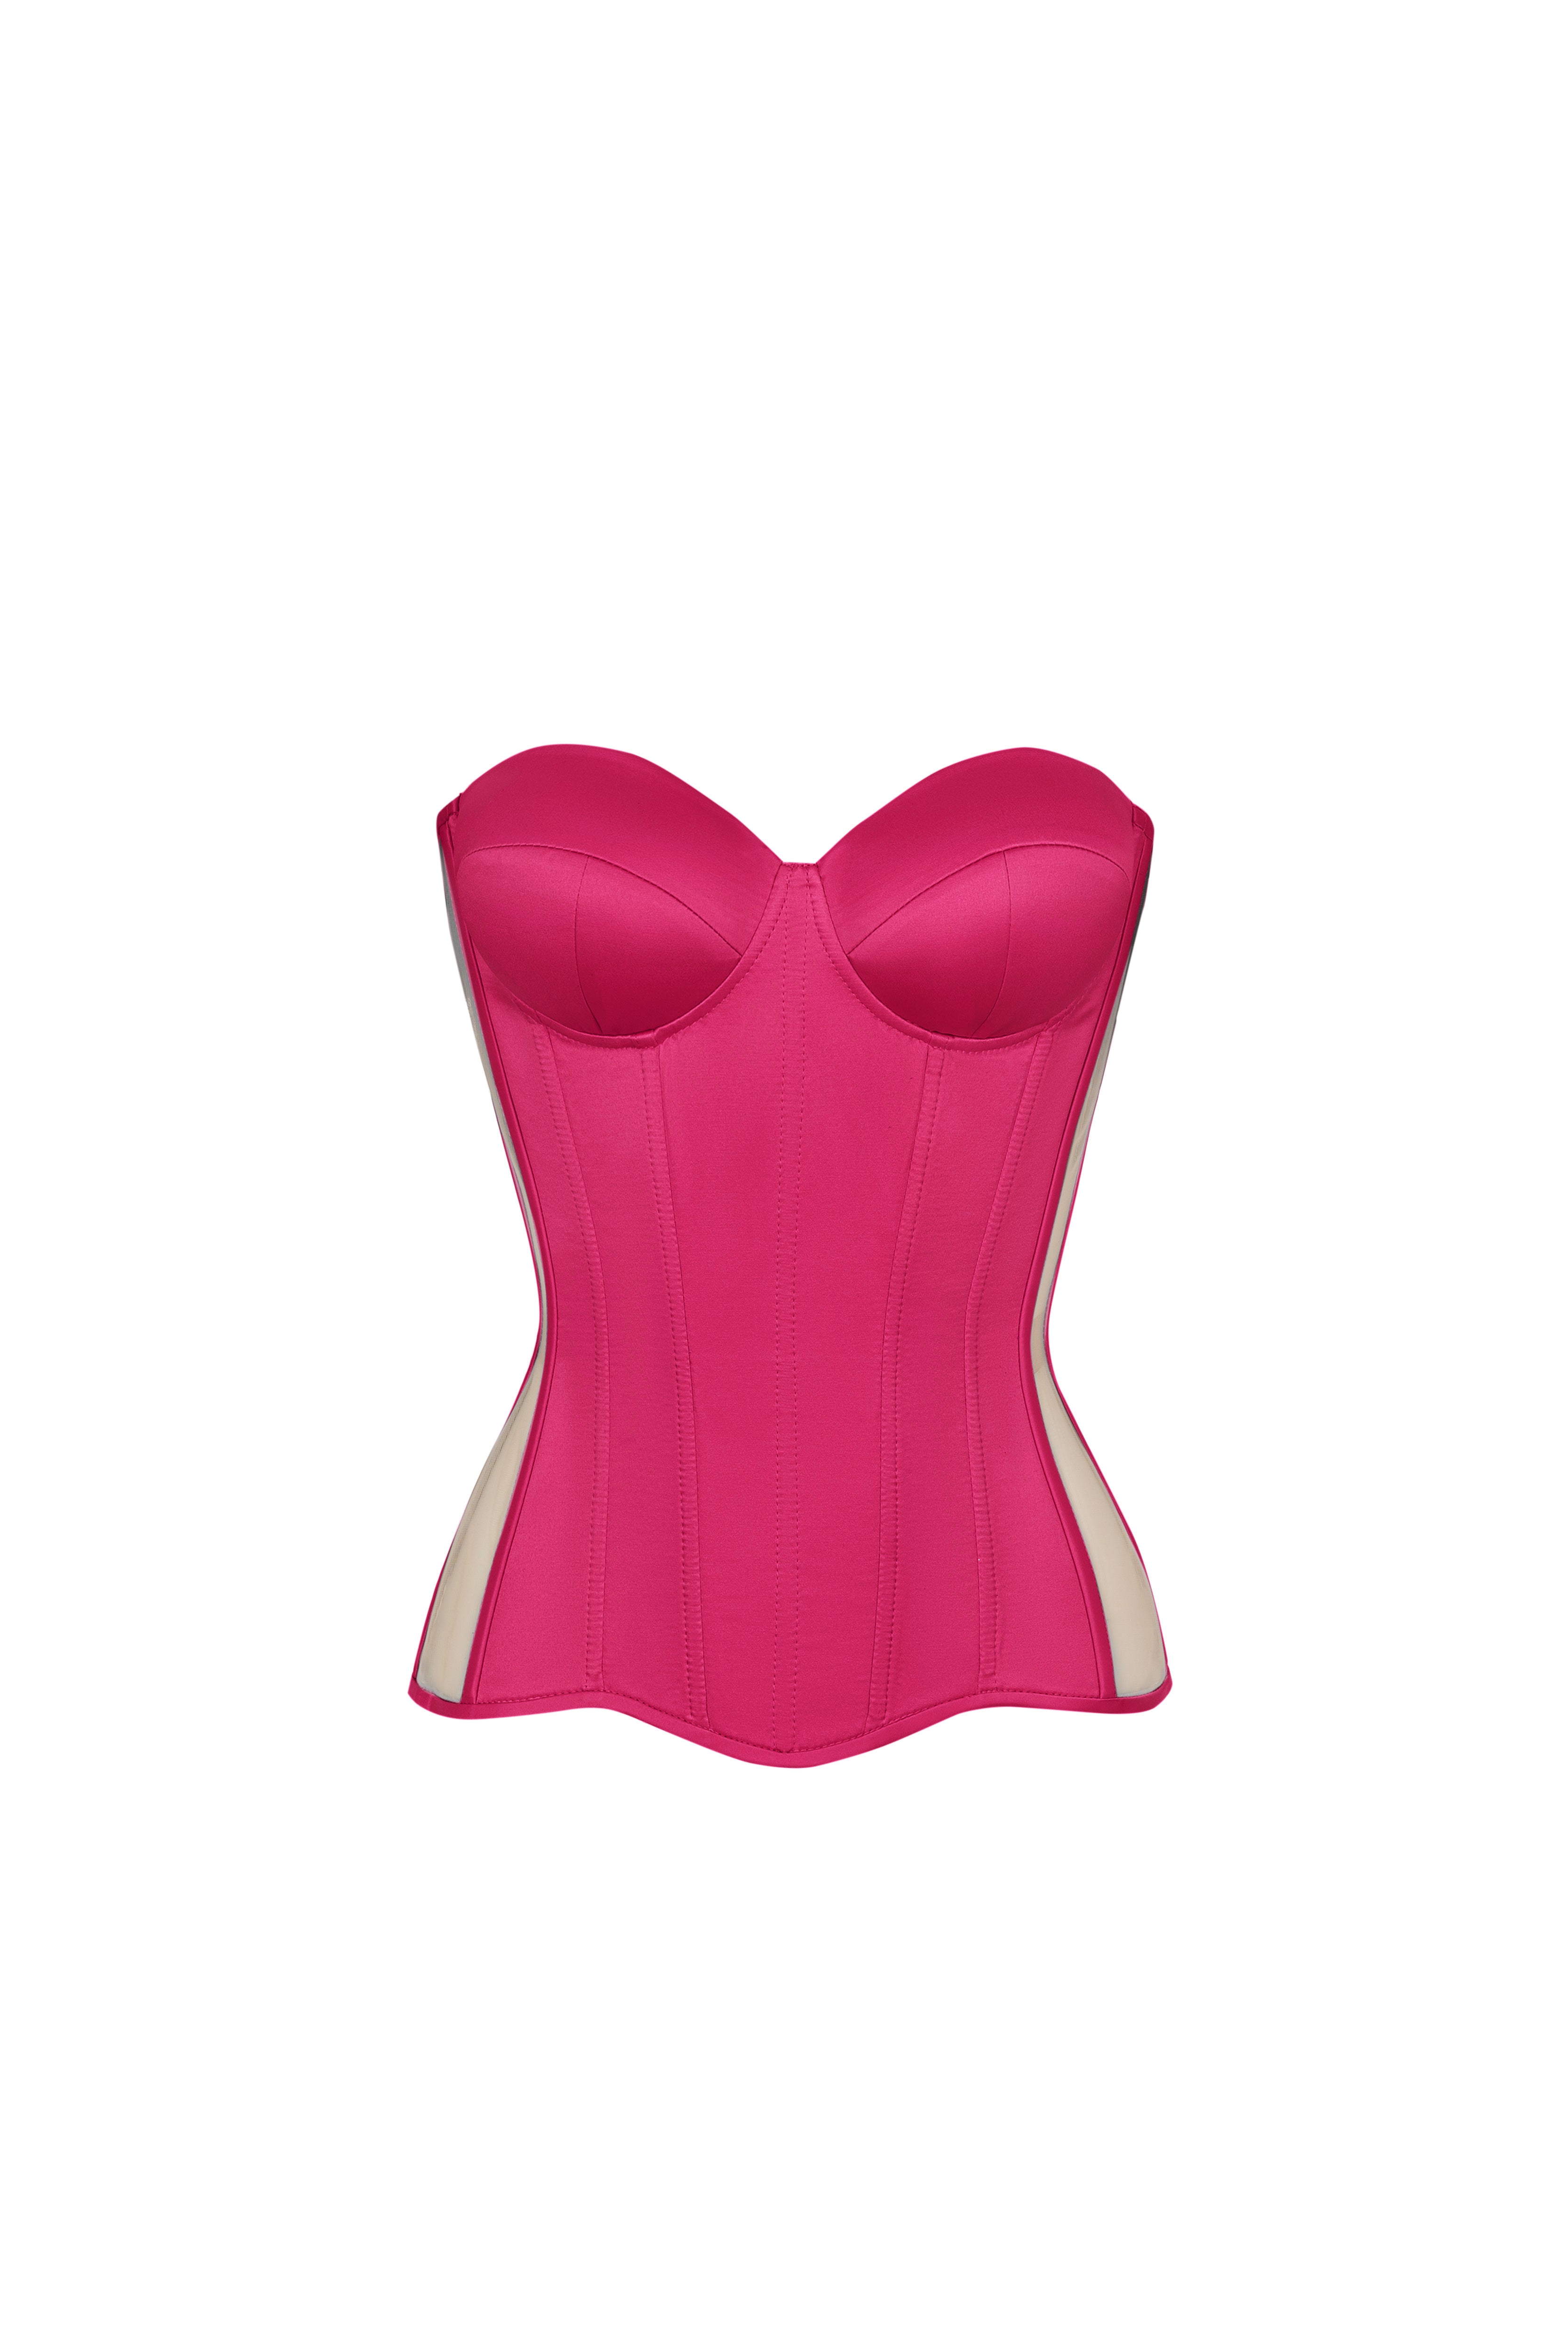 Light pink corset dress with transparent sides - STATNAIA